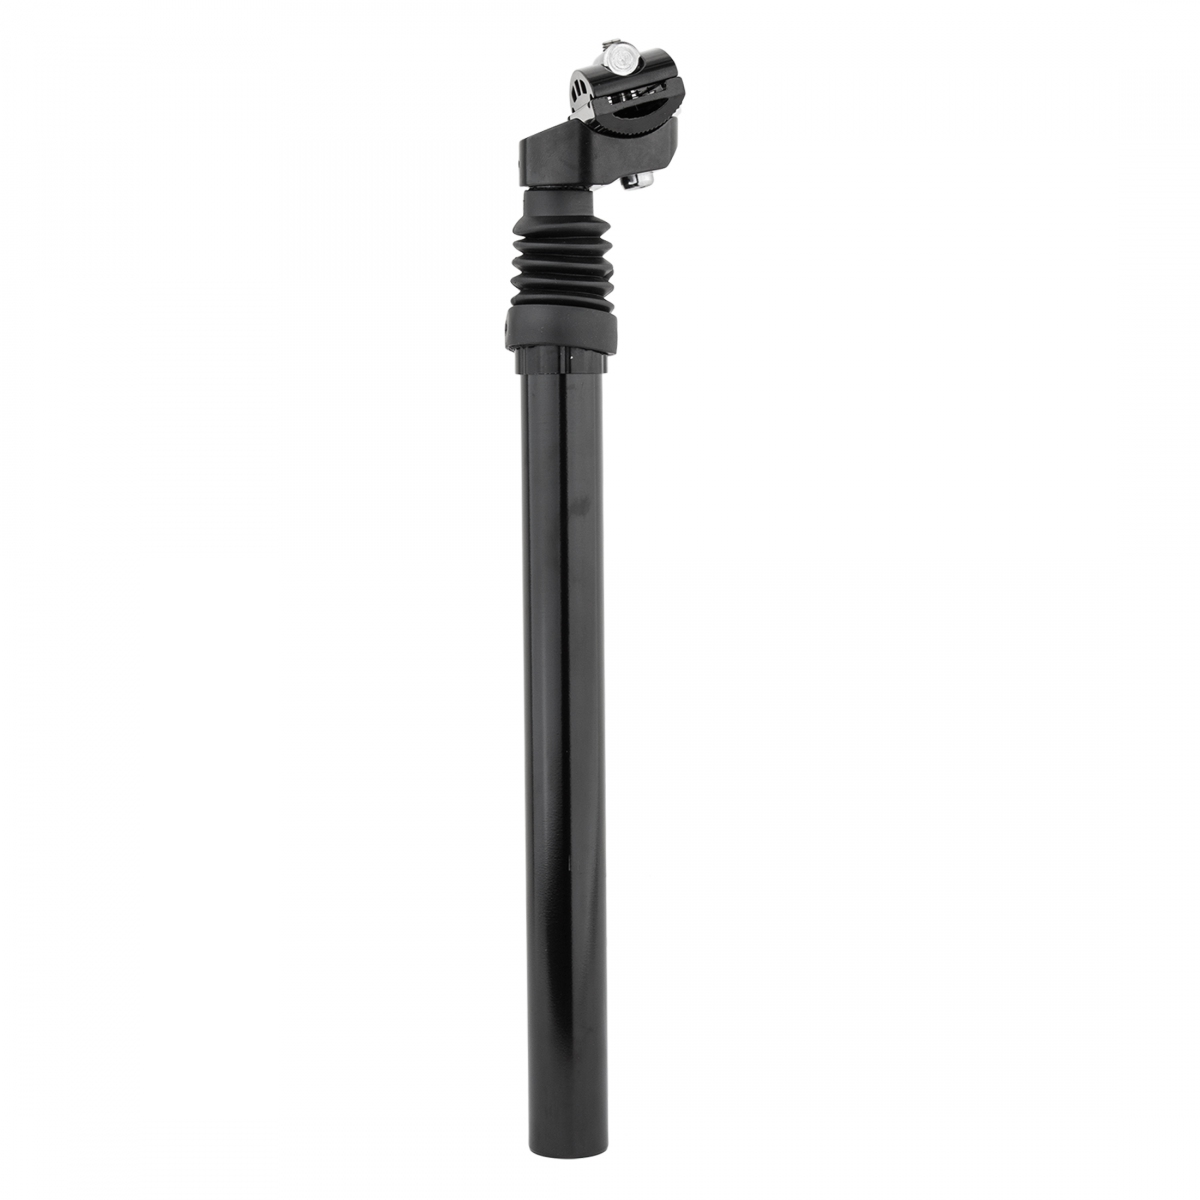 Sunlite Adjustable Suspension Seatpost 27.2mm 350mm Black - image 1 of 1